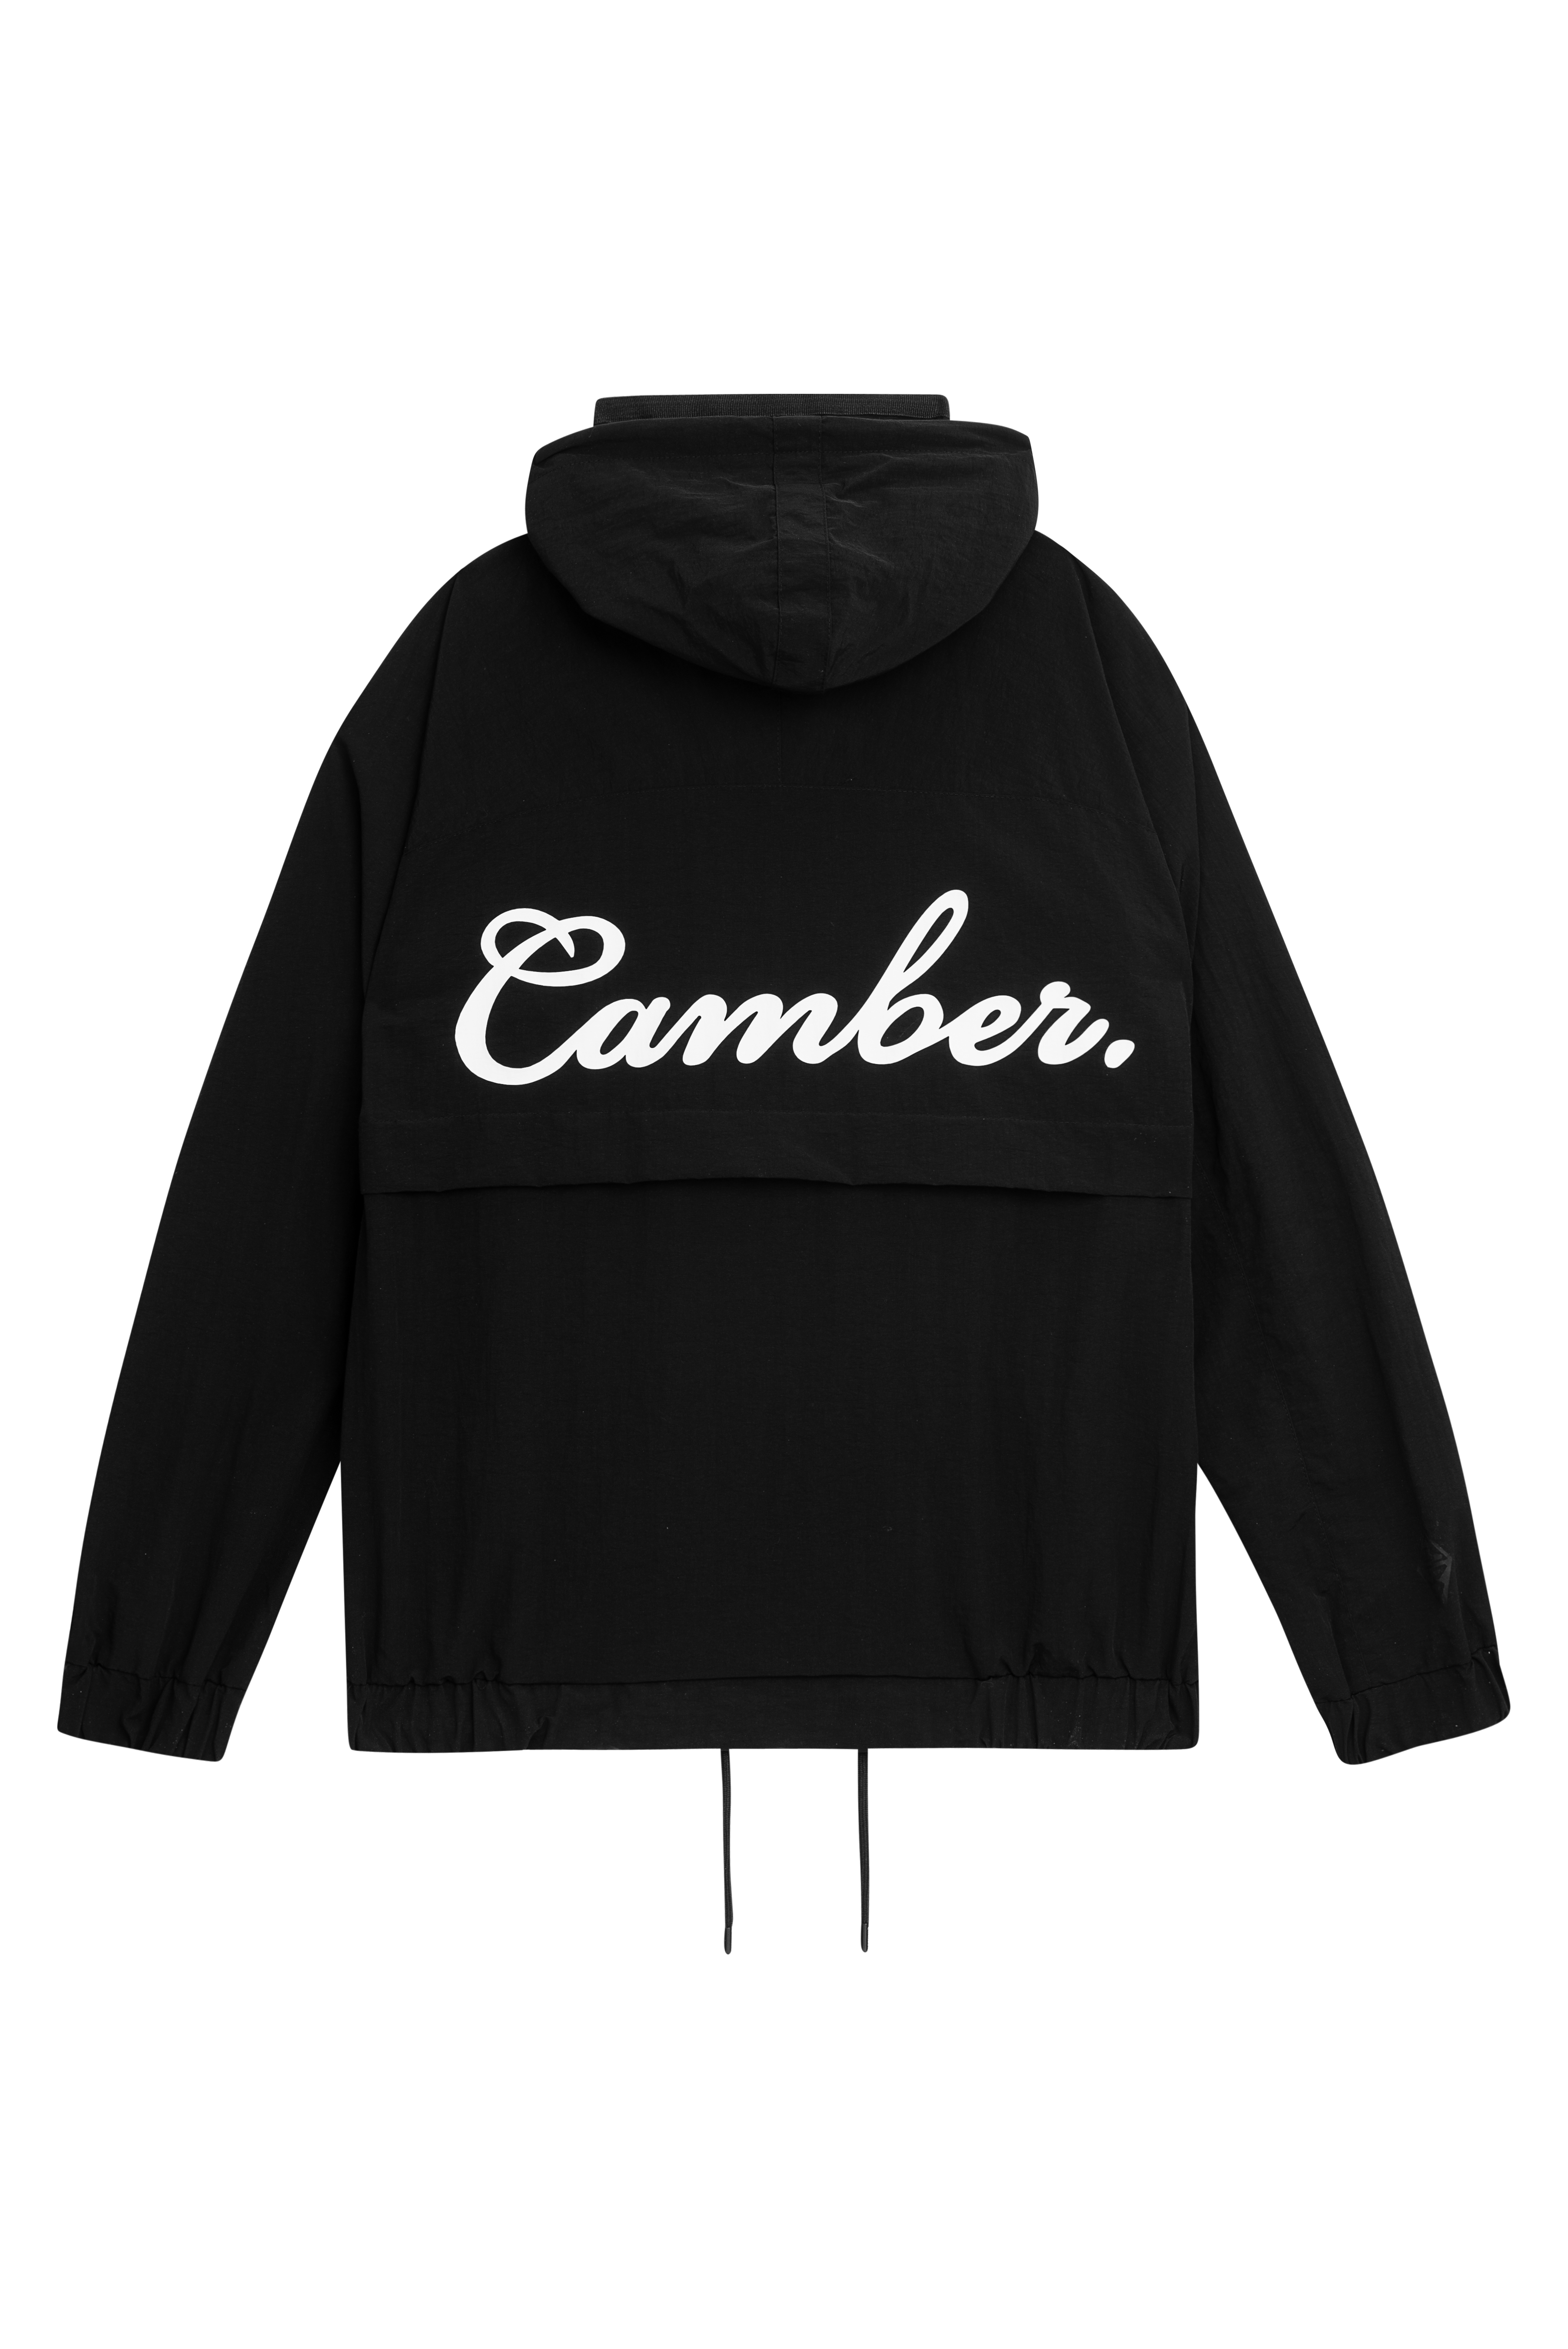 Camber. Windbreaker Black